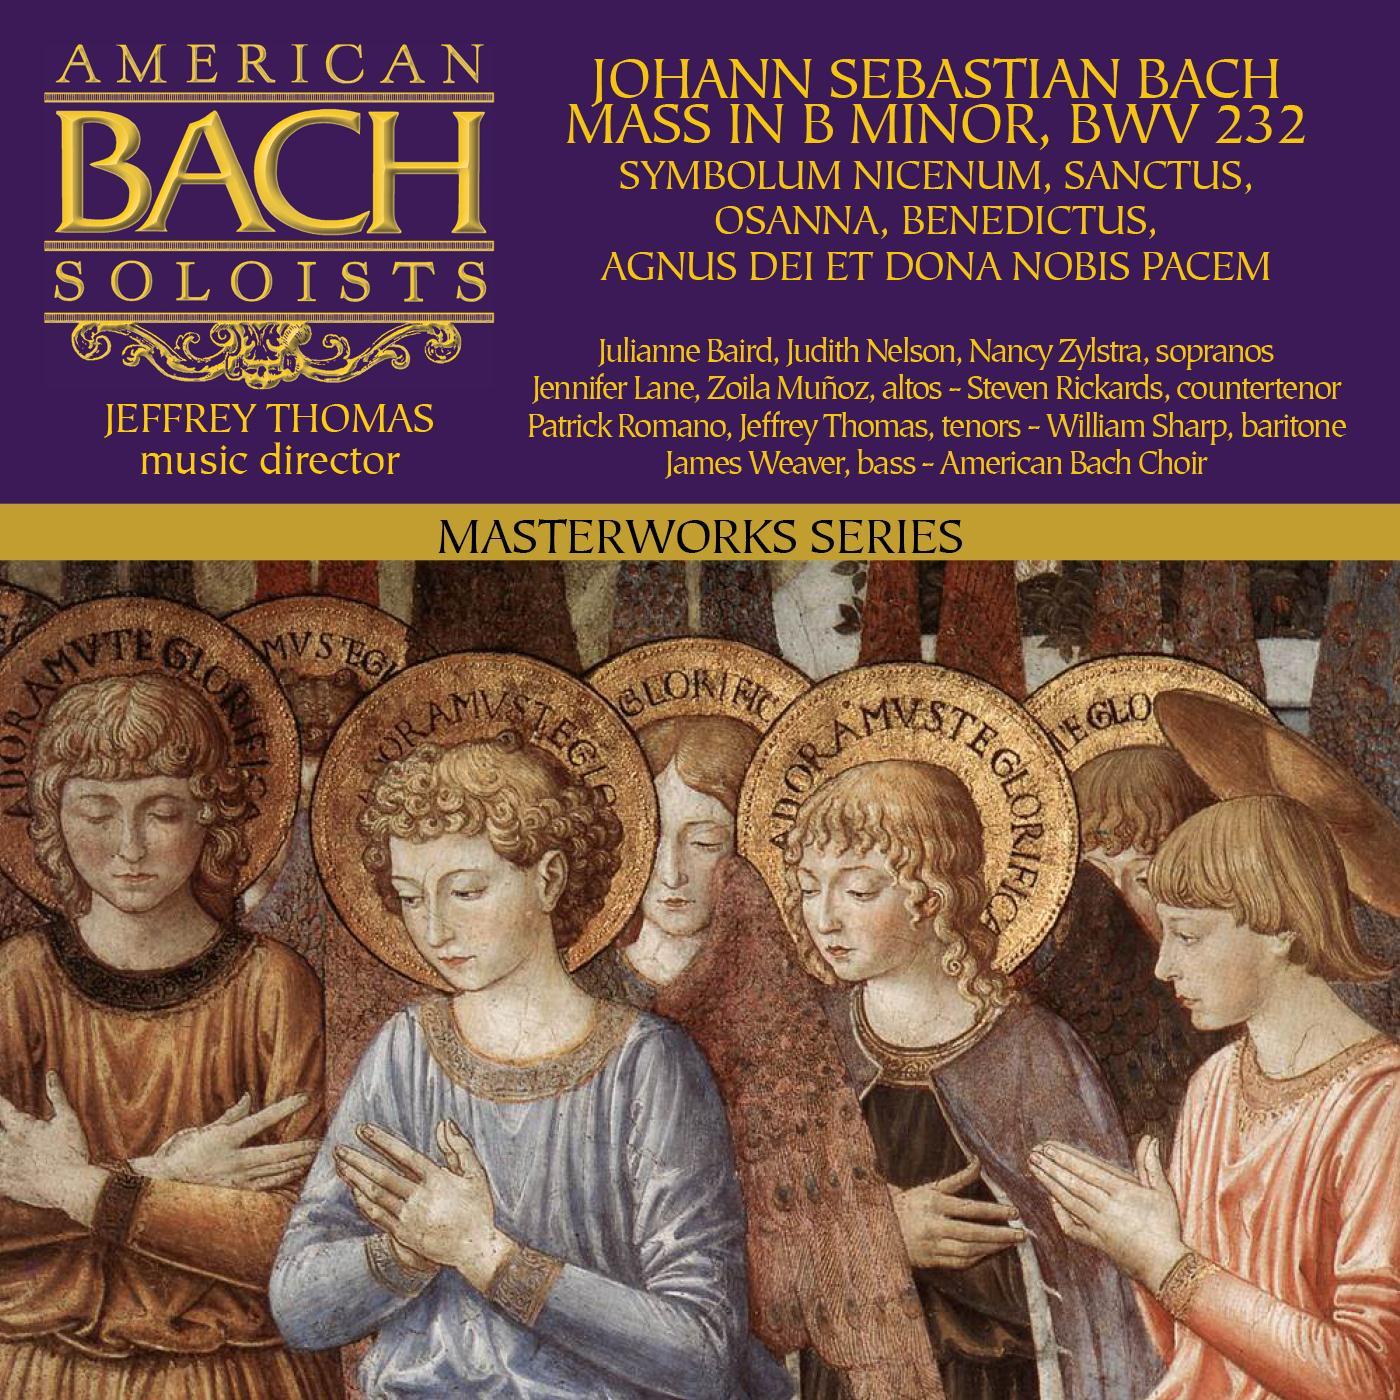 Mass in B Minor, BWV 232 Chorus: Et incarnatus est